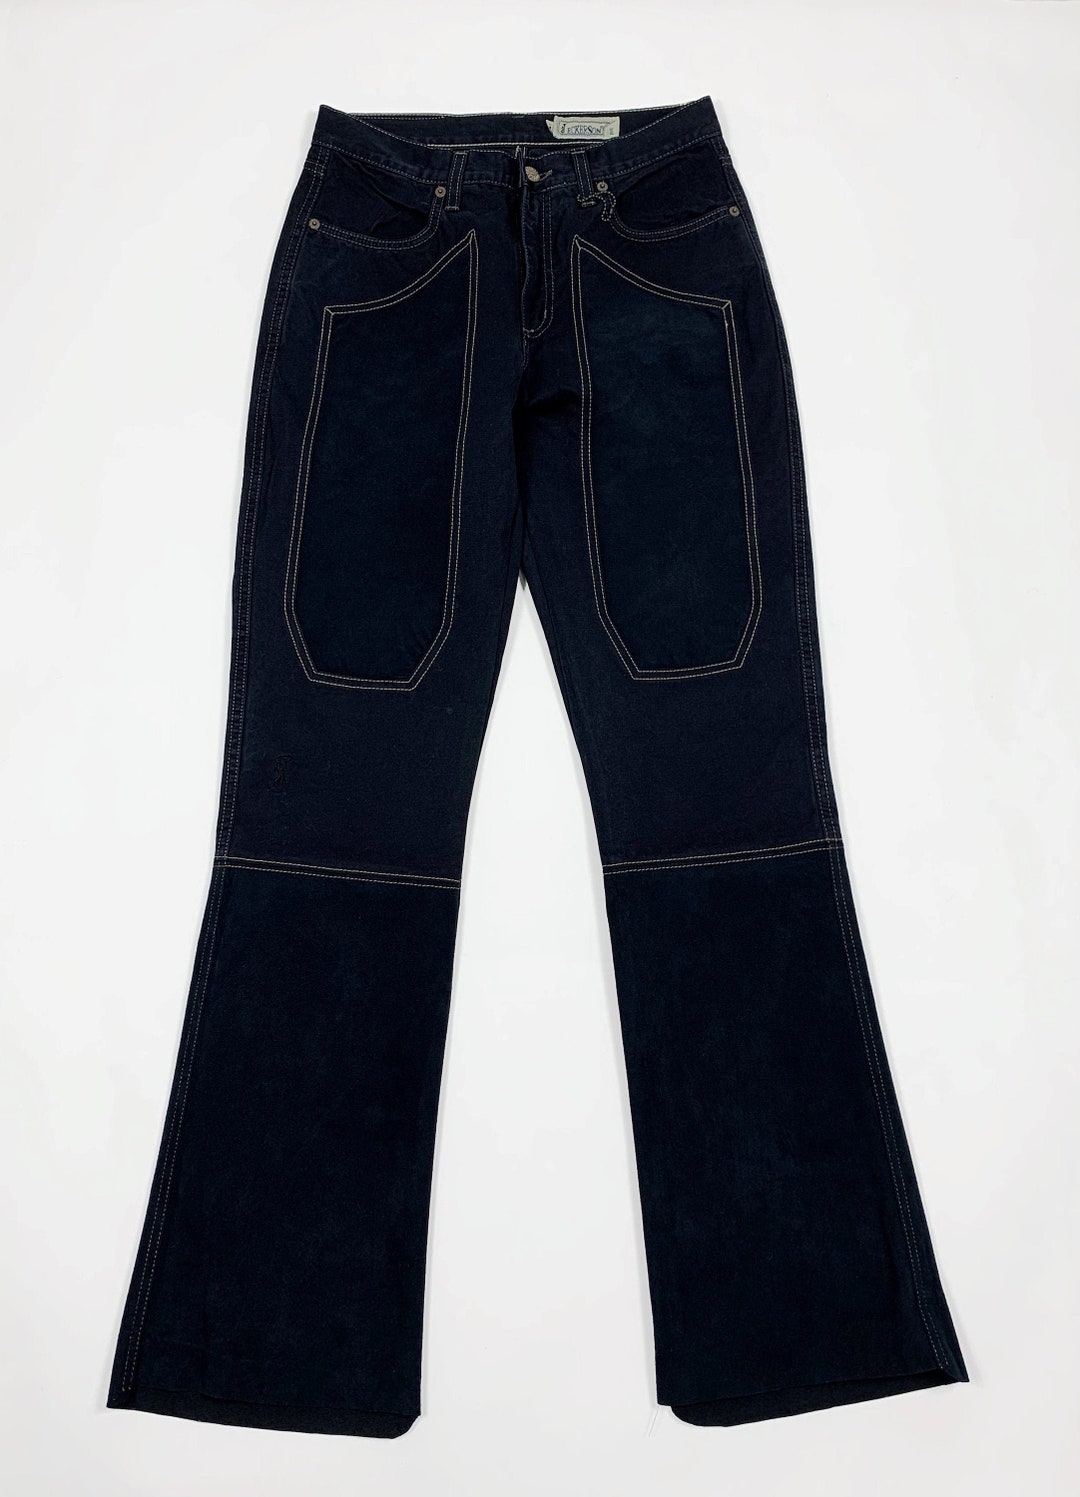 Jeckerson Jeans Trousers Women W27 Tg 41 Paw Bootcut Flared - Etsy